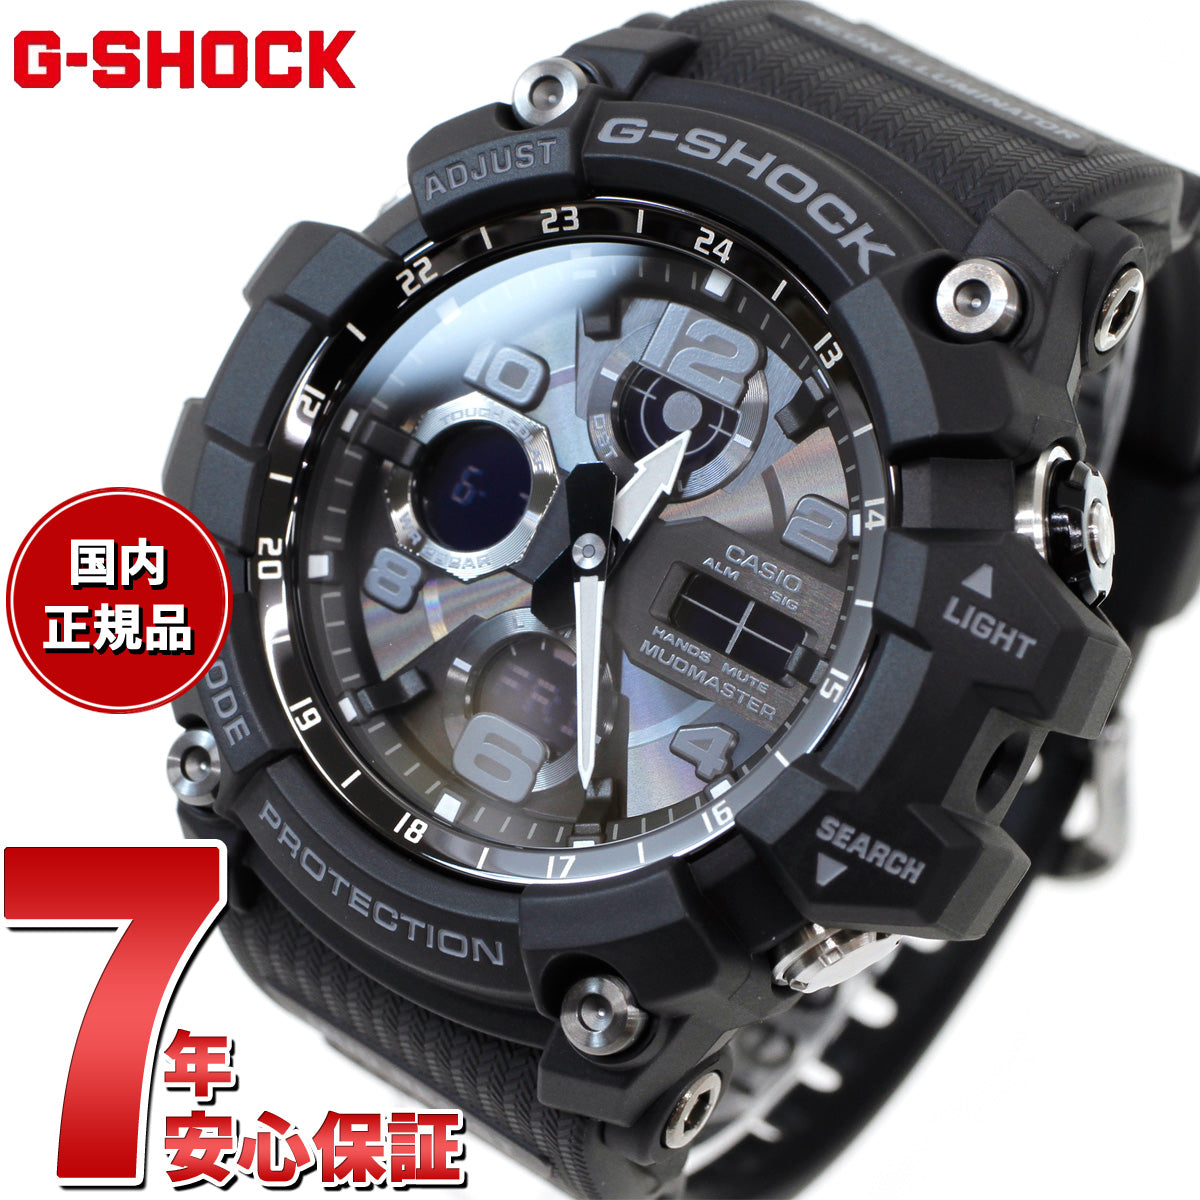 G-SHOCK 電波 ソーラー 電波時計 カシオ Gショック マッドマスター MUDMASTER 腕時計 メンズ MASTER OF G  GWG-100-1AJF